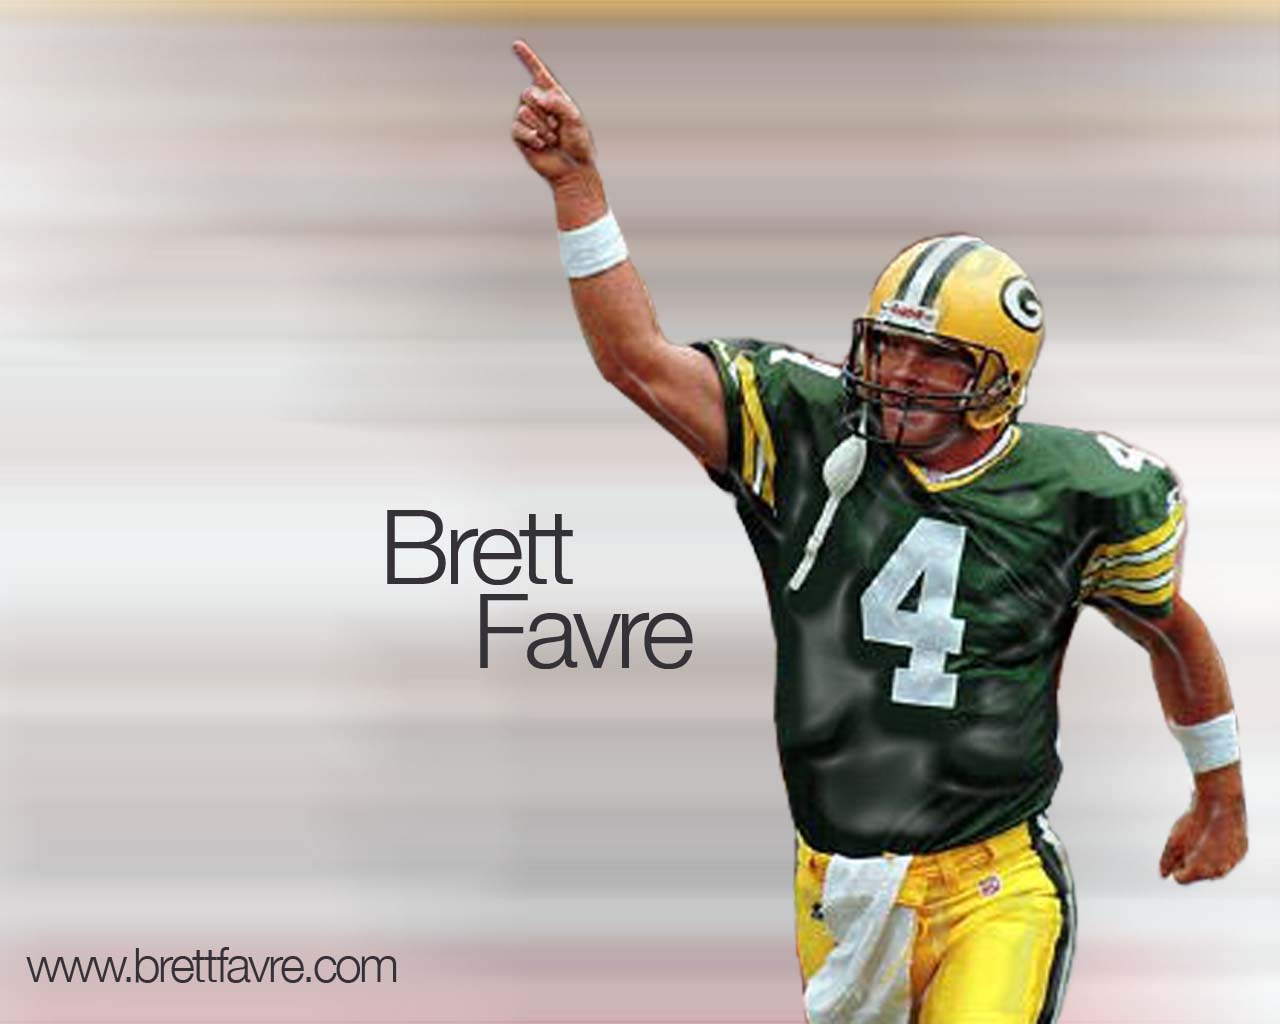 Free Wallpaper Life: Brett Favre American football quarterback